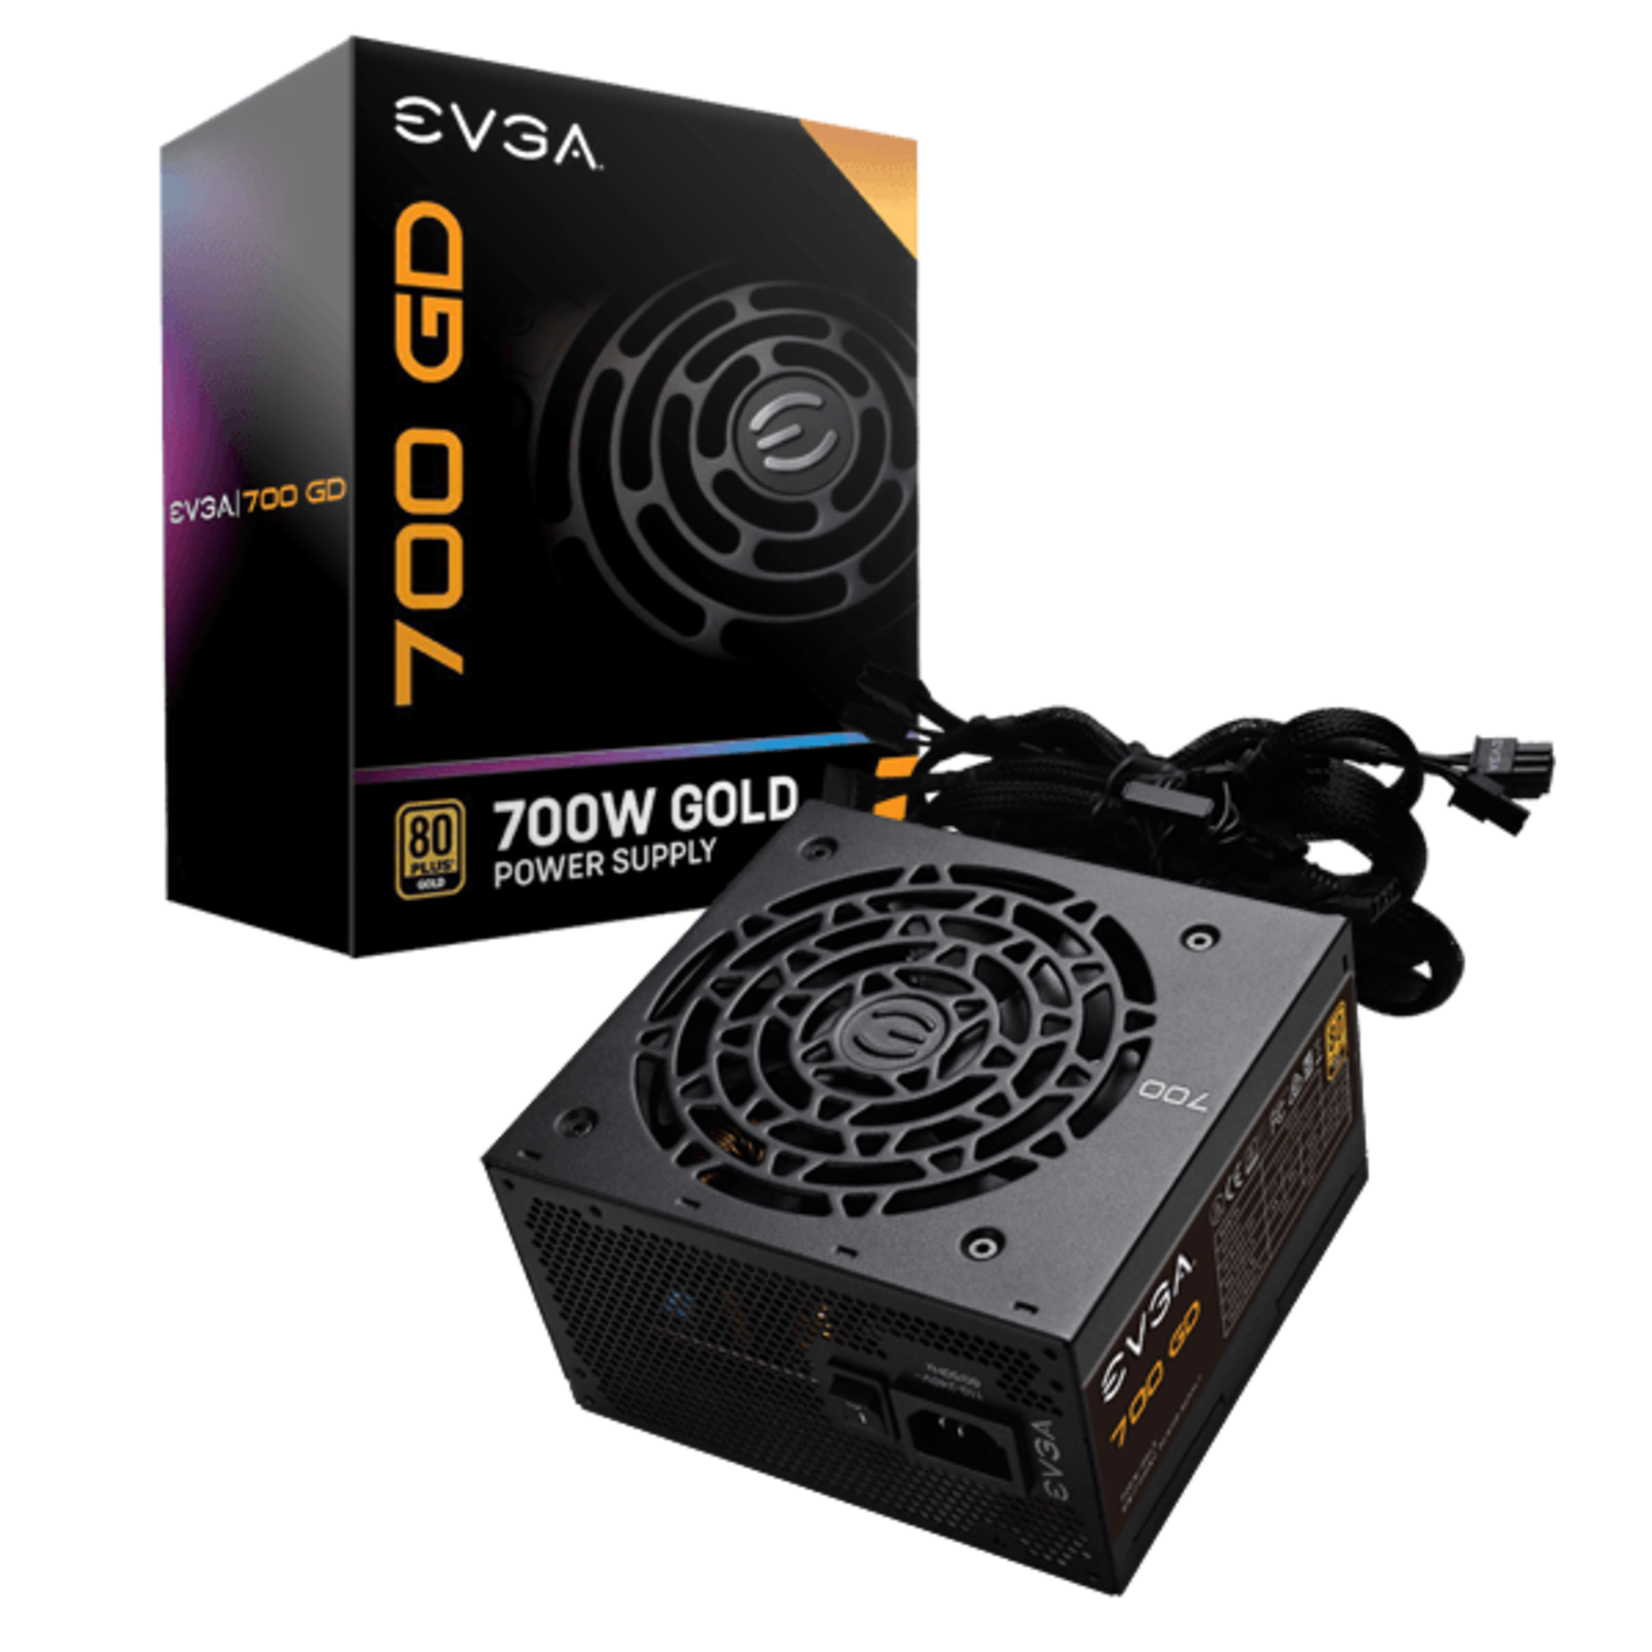 EVGA EVGA 700W GD 80+ Gold Power Supply